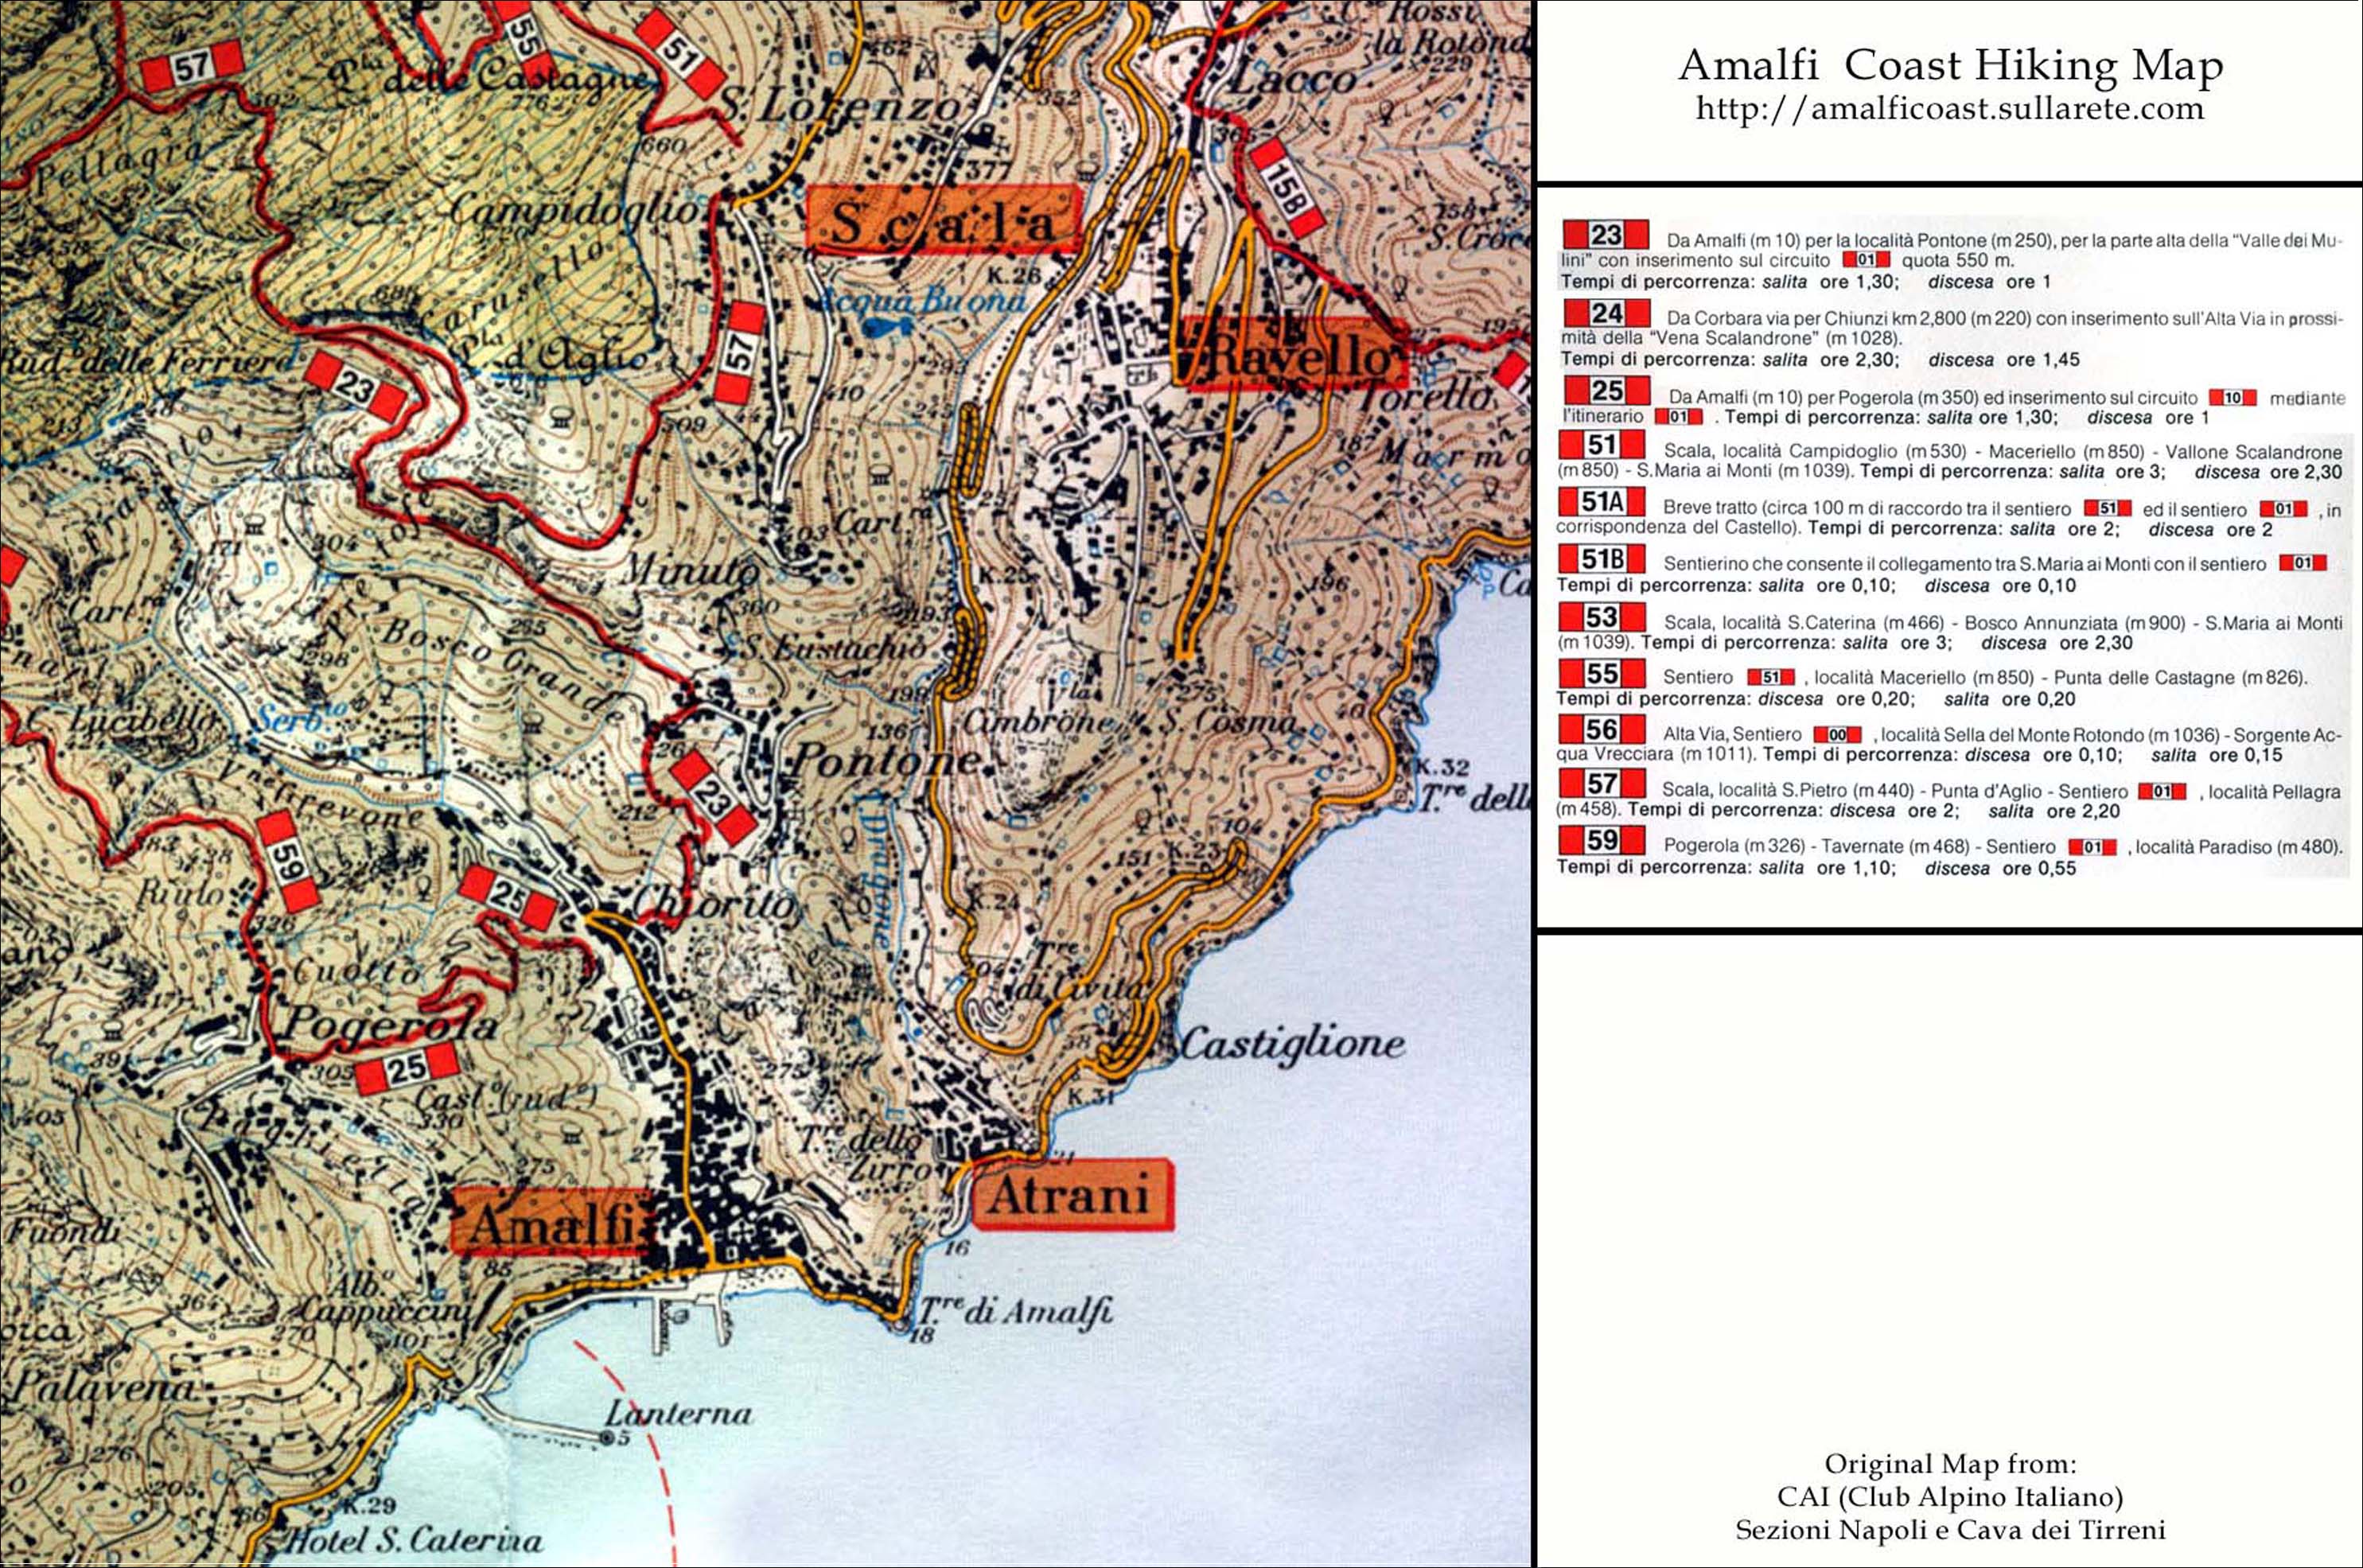 Amalfi Coast Online Travel Guide Amalfi Coast Hiking Maps